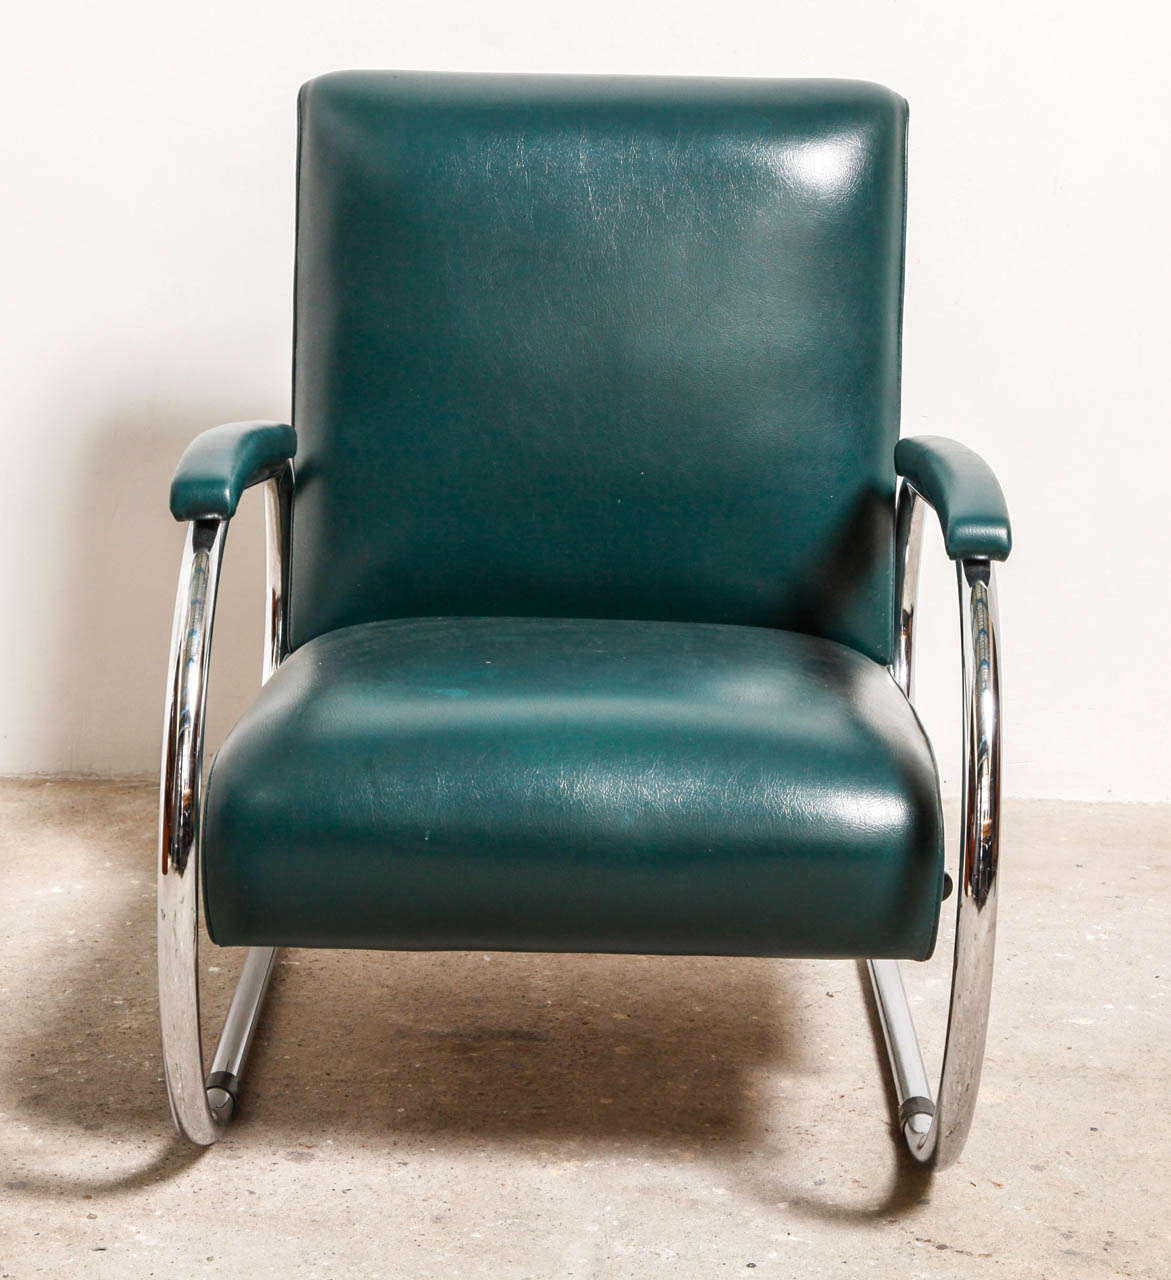 Tubax streamline chair.
Original Tubax Art Deco chair in green upholstery good condition. Rare find!